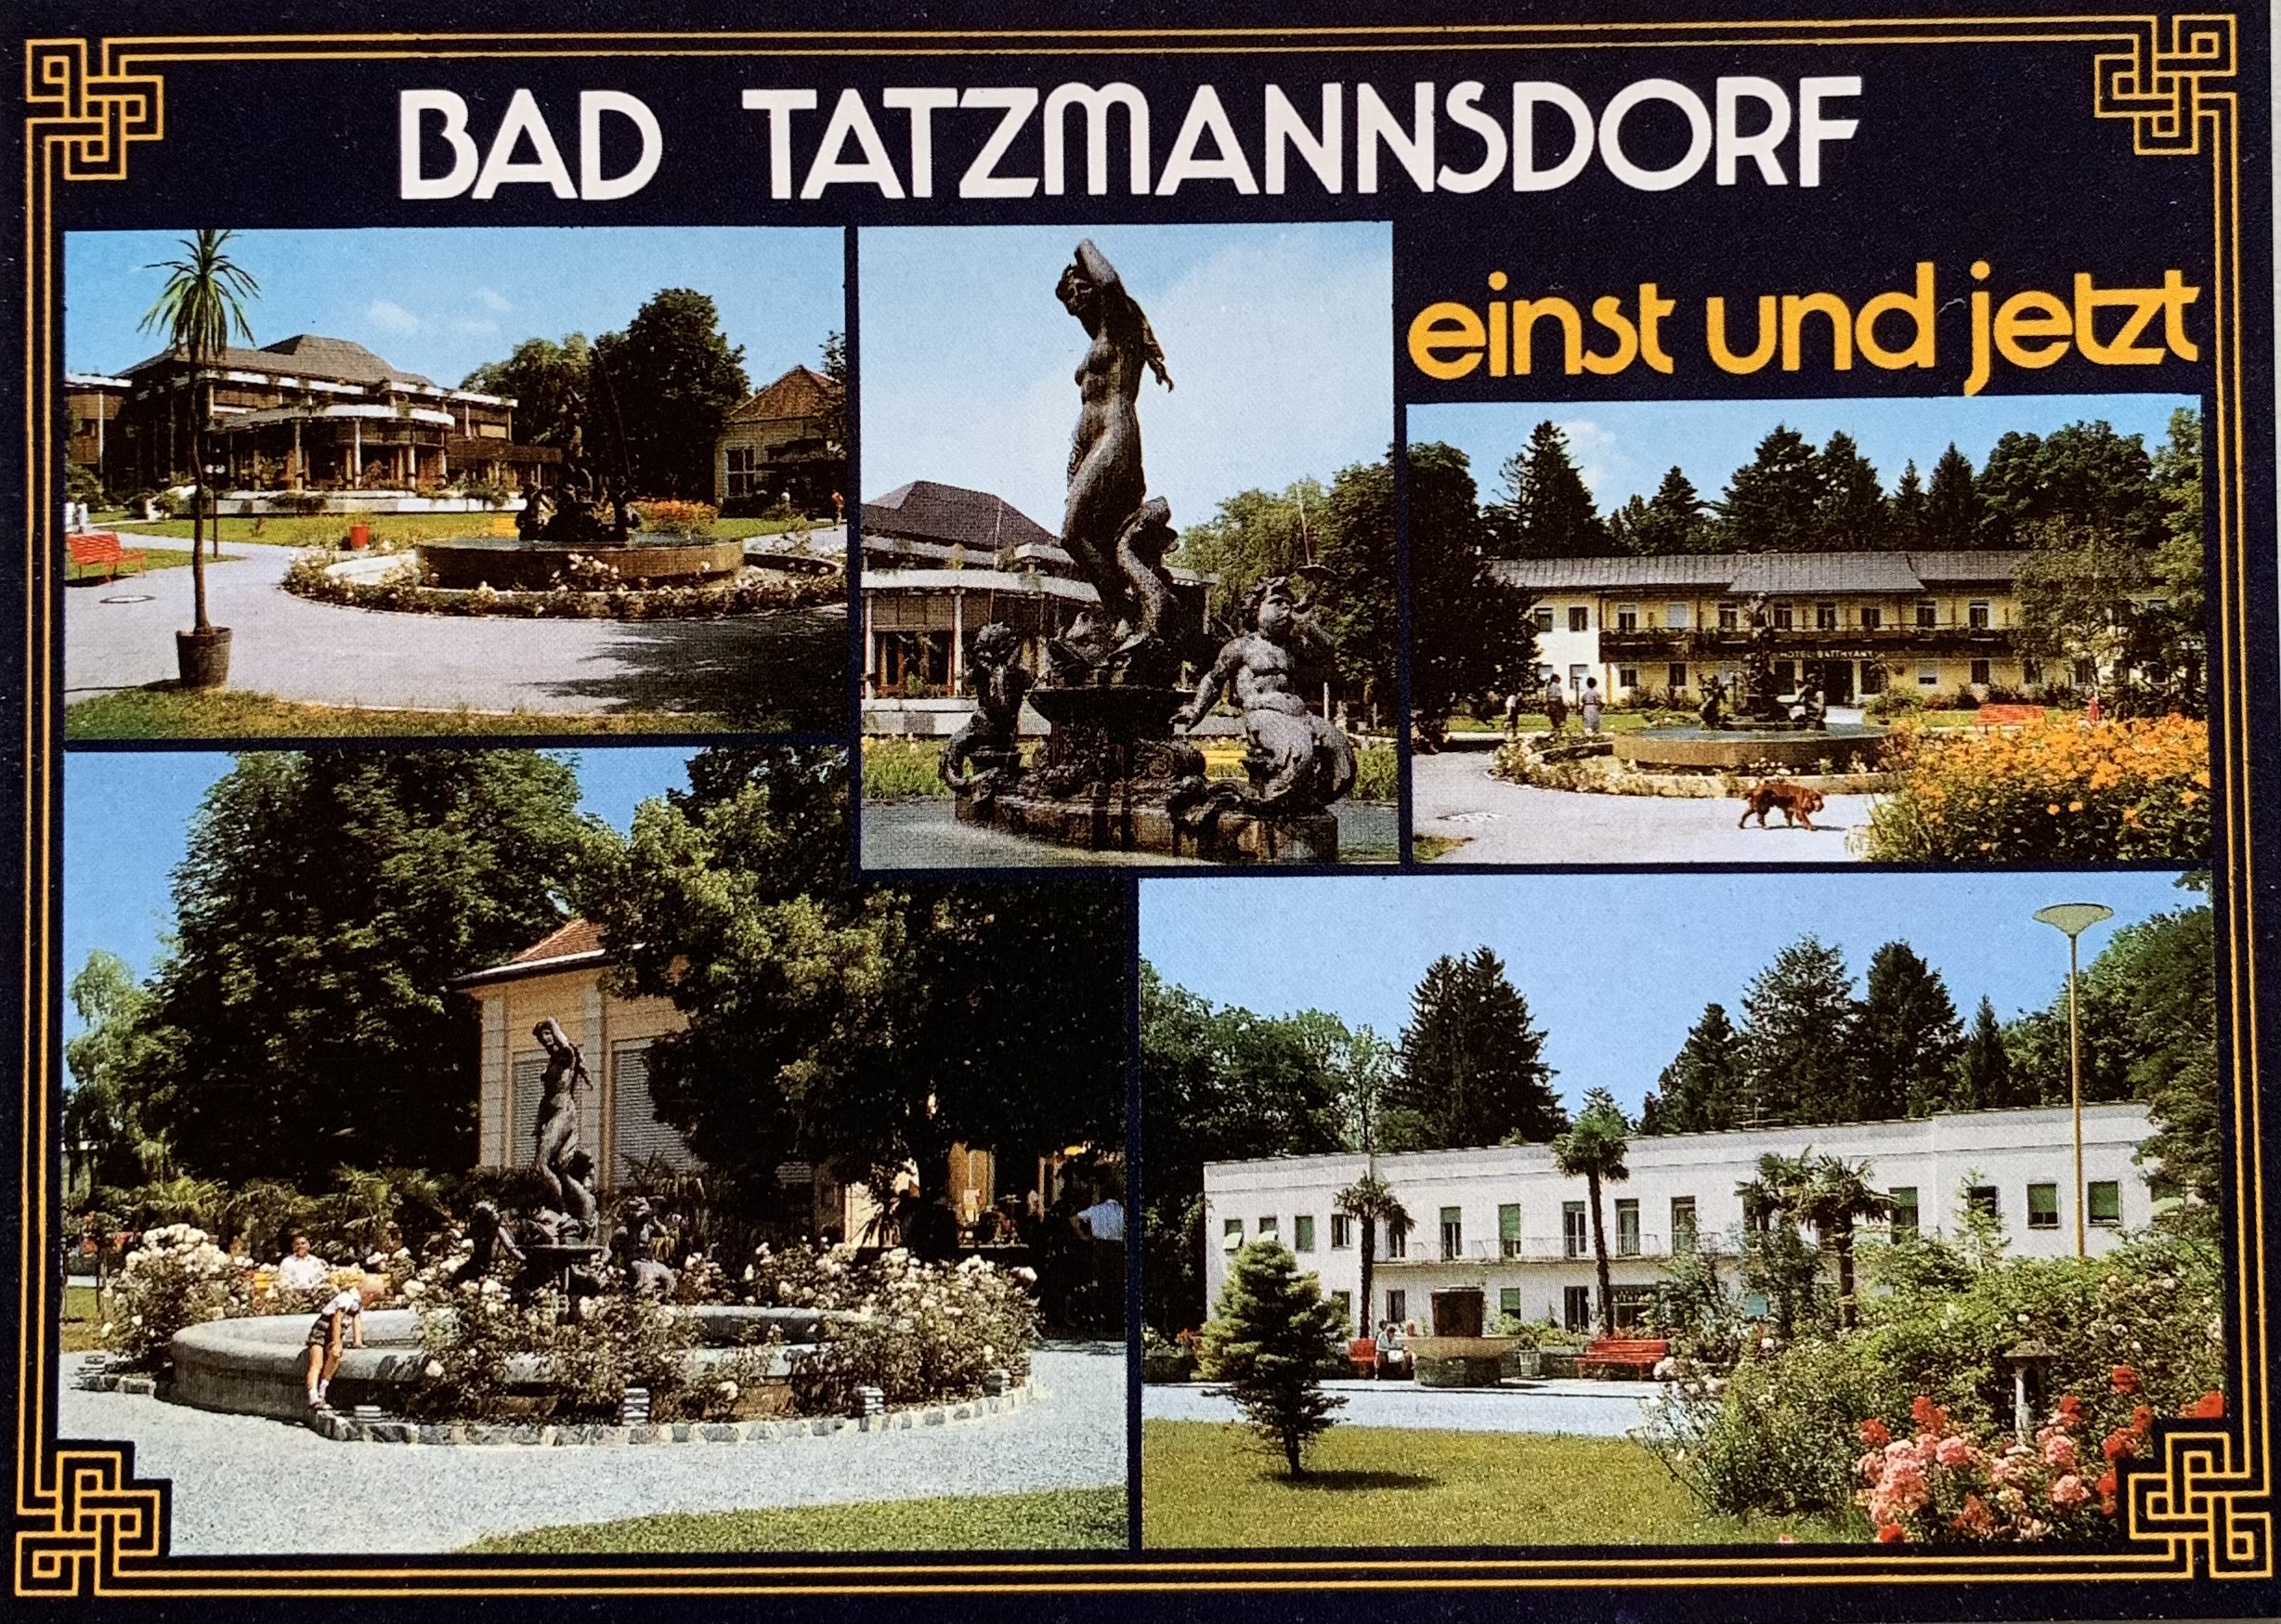 AK - Bad Tatzmannsdorf 01-7431-18